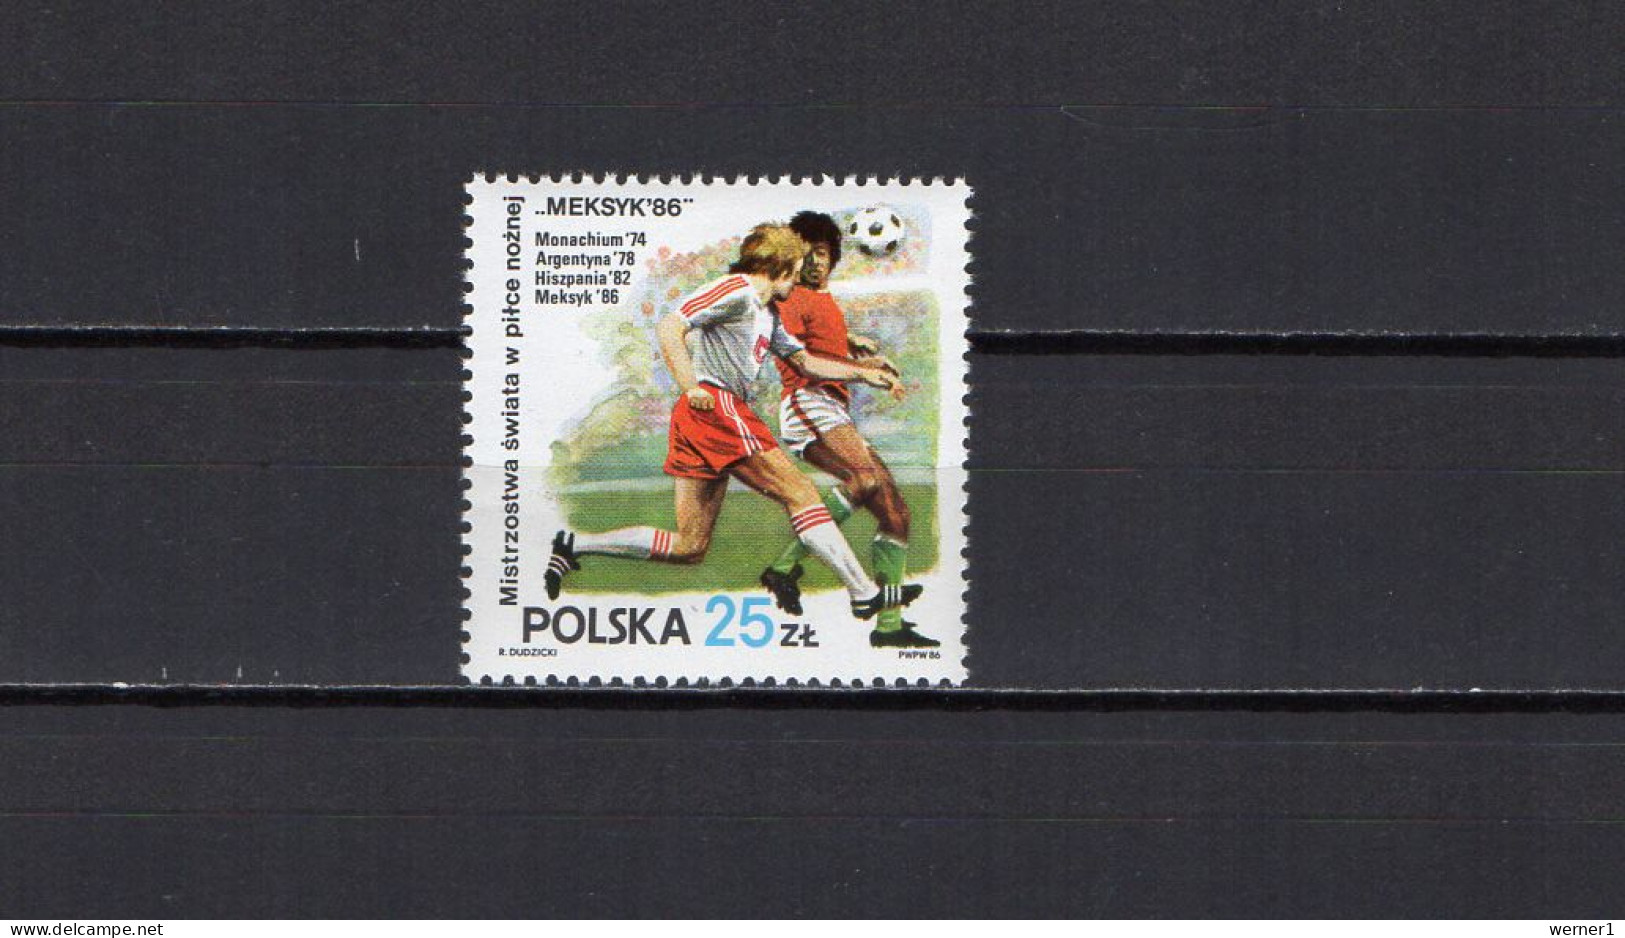 Poland 1986 Football Soccer World Cup Stamp MNH - 1986 – Mexiko